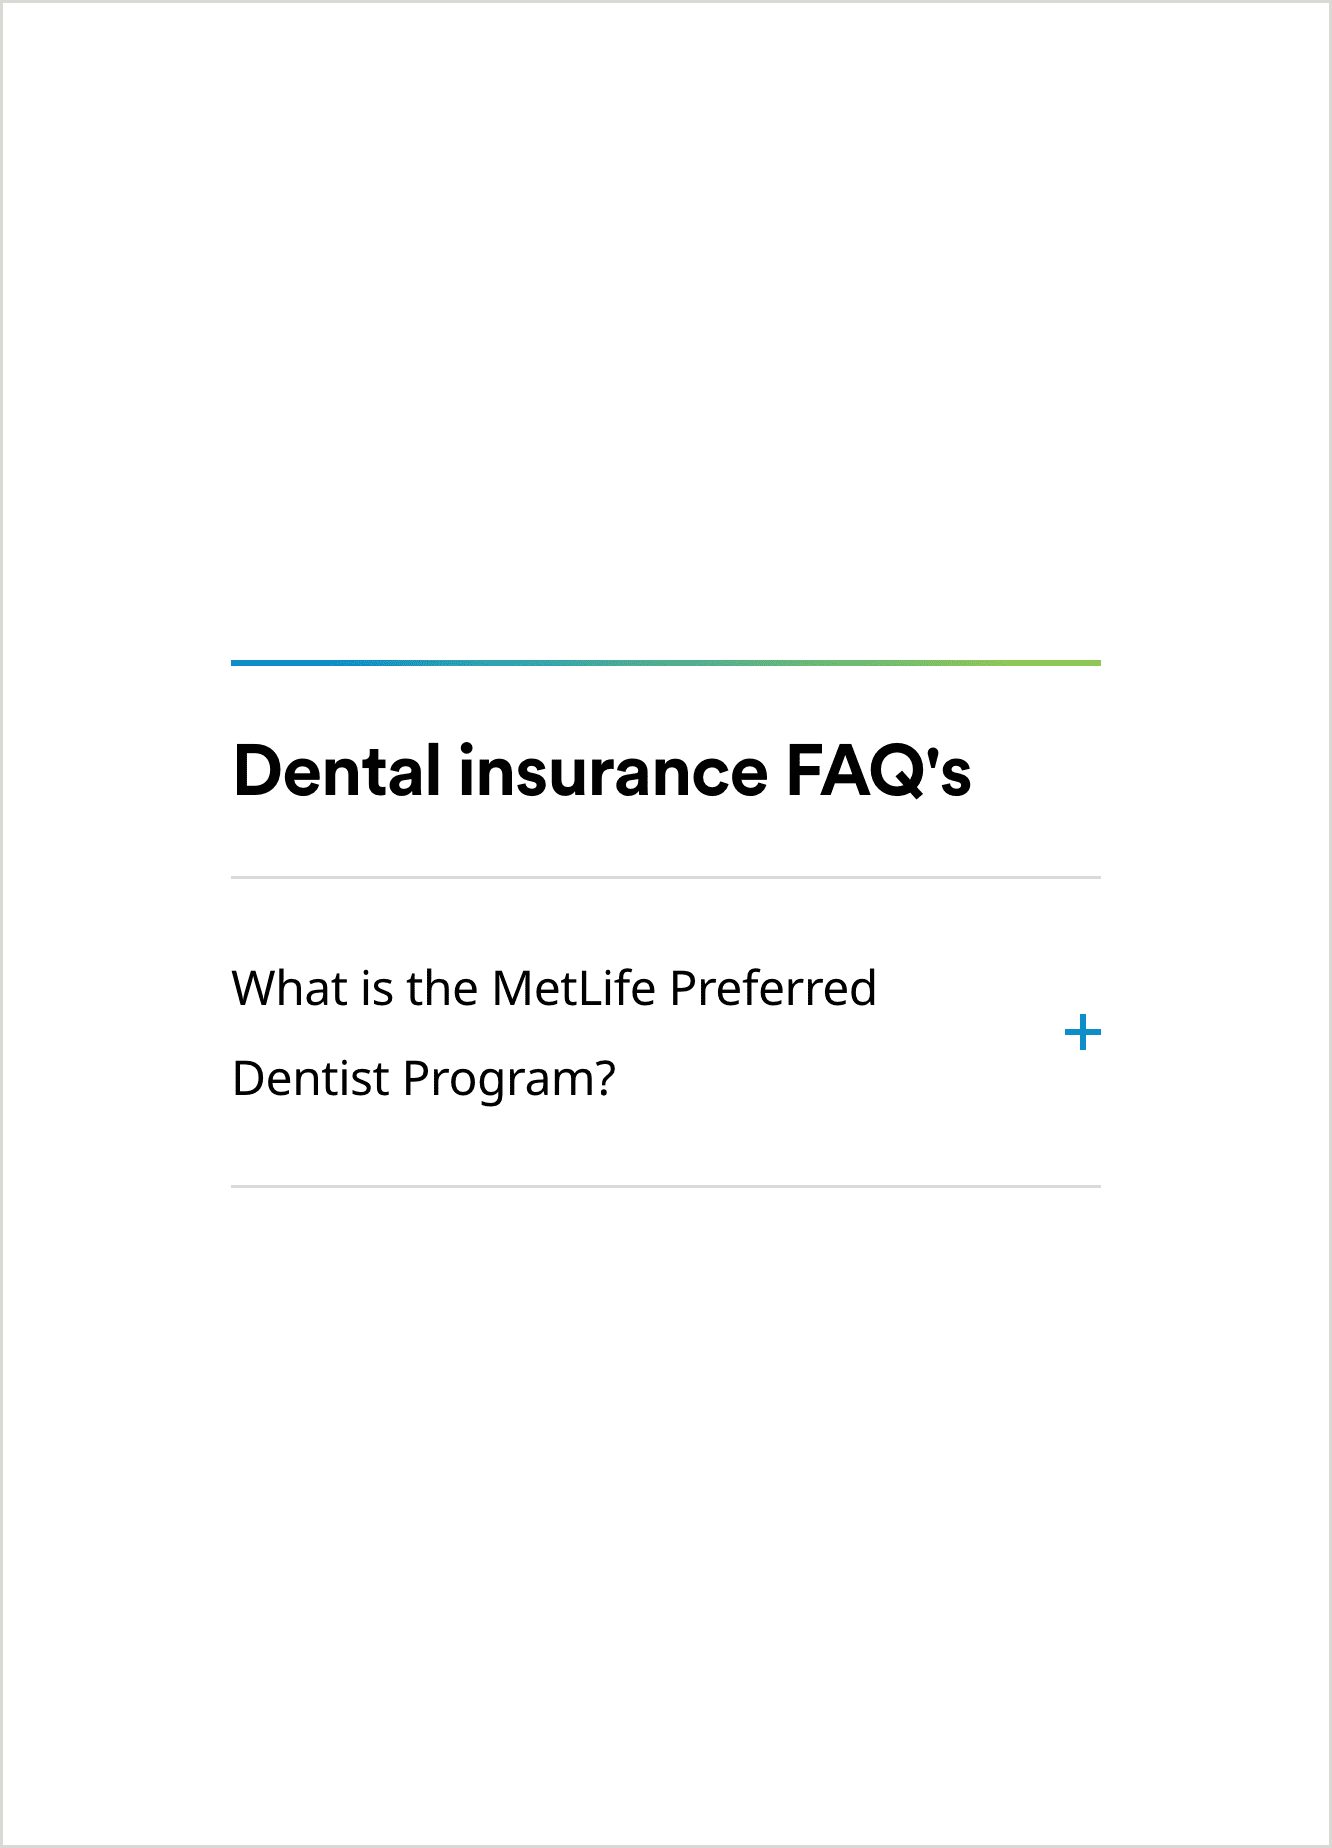 Table FAQ default